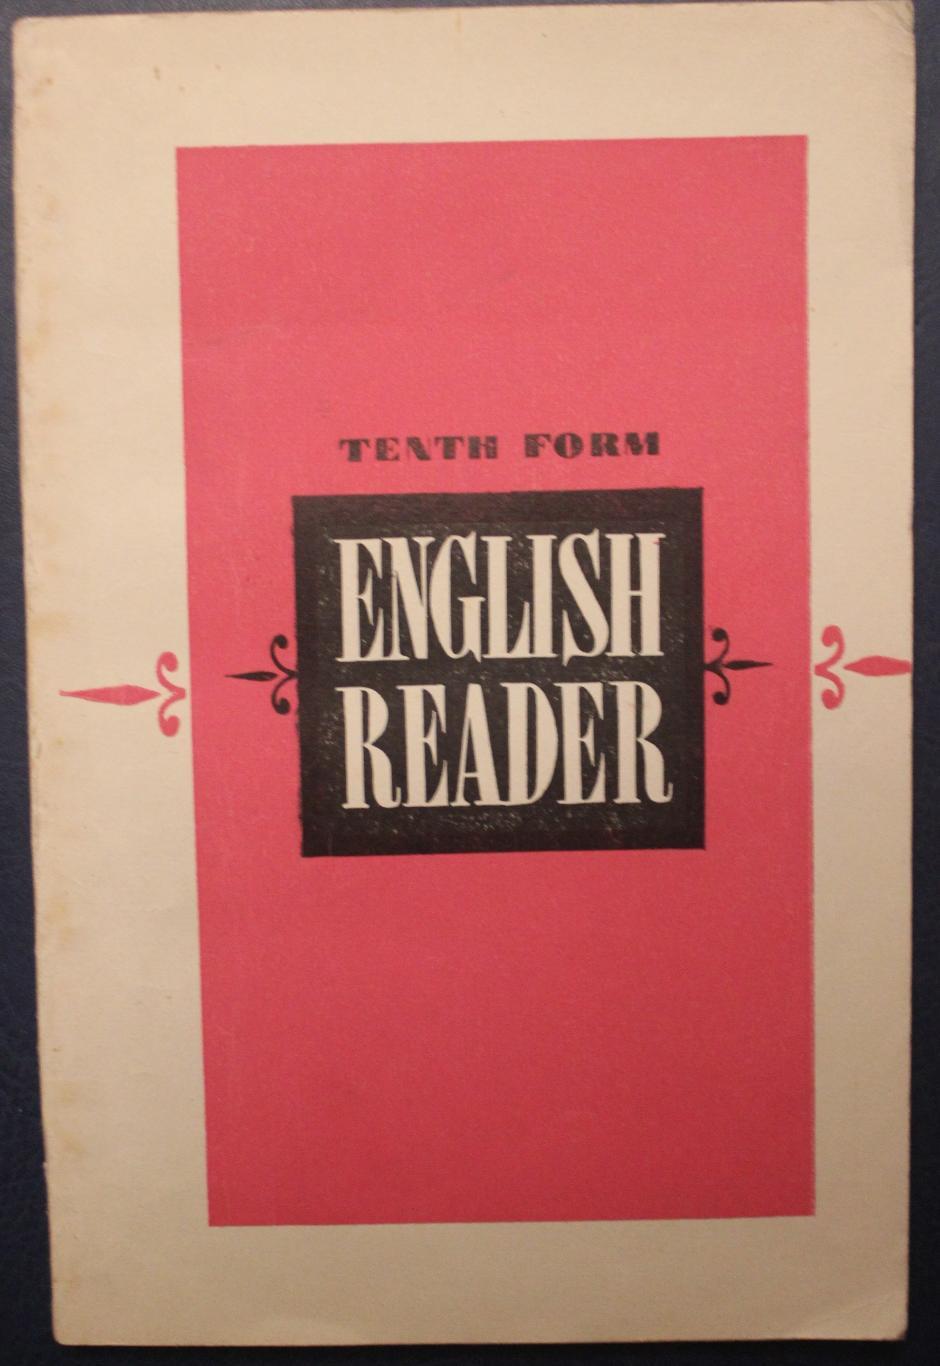 English reader (М.А.Боровик, Е.Г.Копыл)